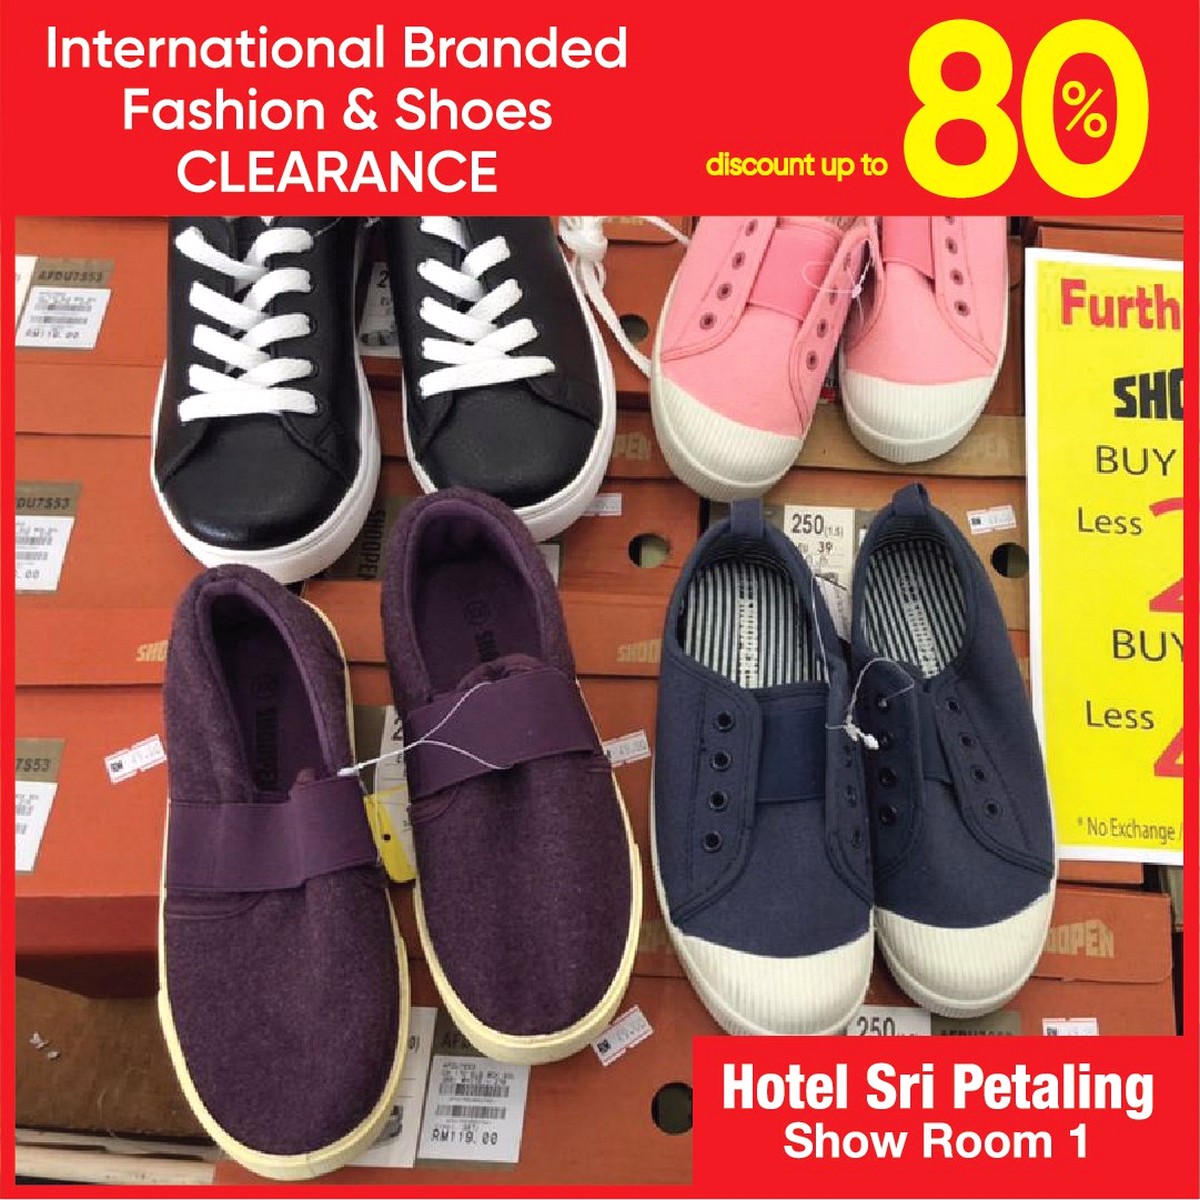 Hotel-Sri-Petaling-Warehouse-Sale-2021-15 - Apparels Fashion Accessories Fashion Lifestyle & Department Store Kuala Lumpur Selangor Warehouse Sale & Clearance in Malaysia 